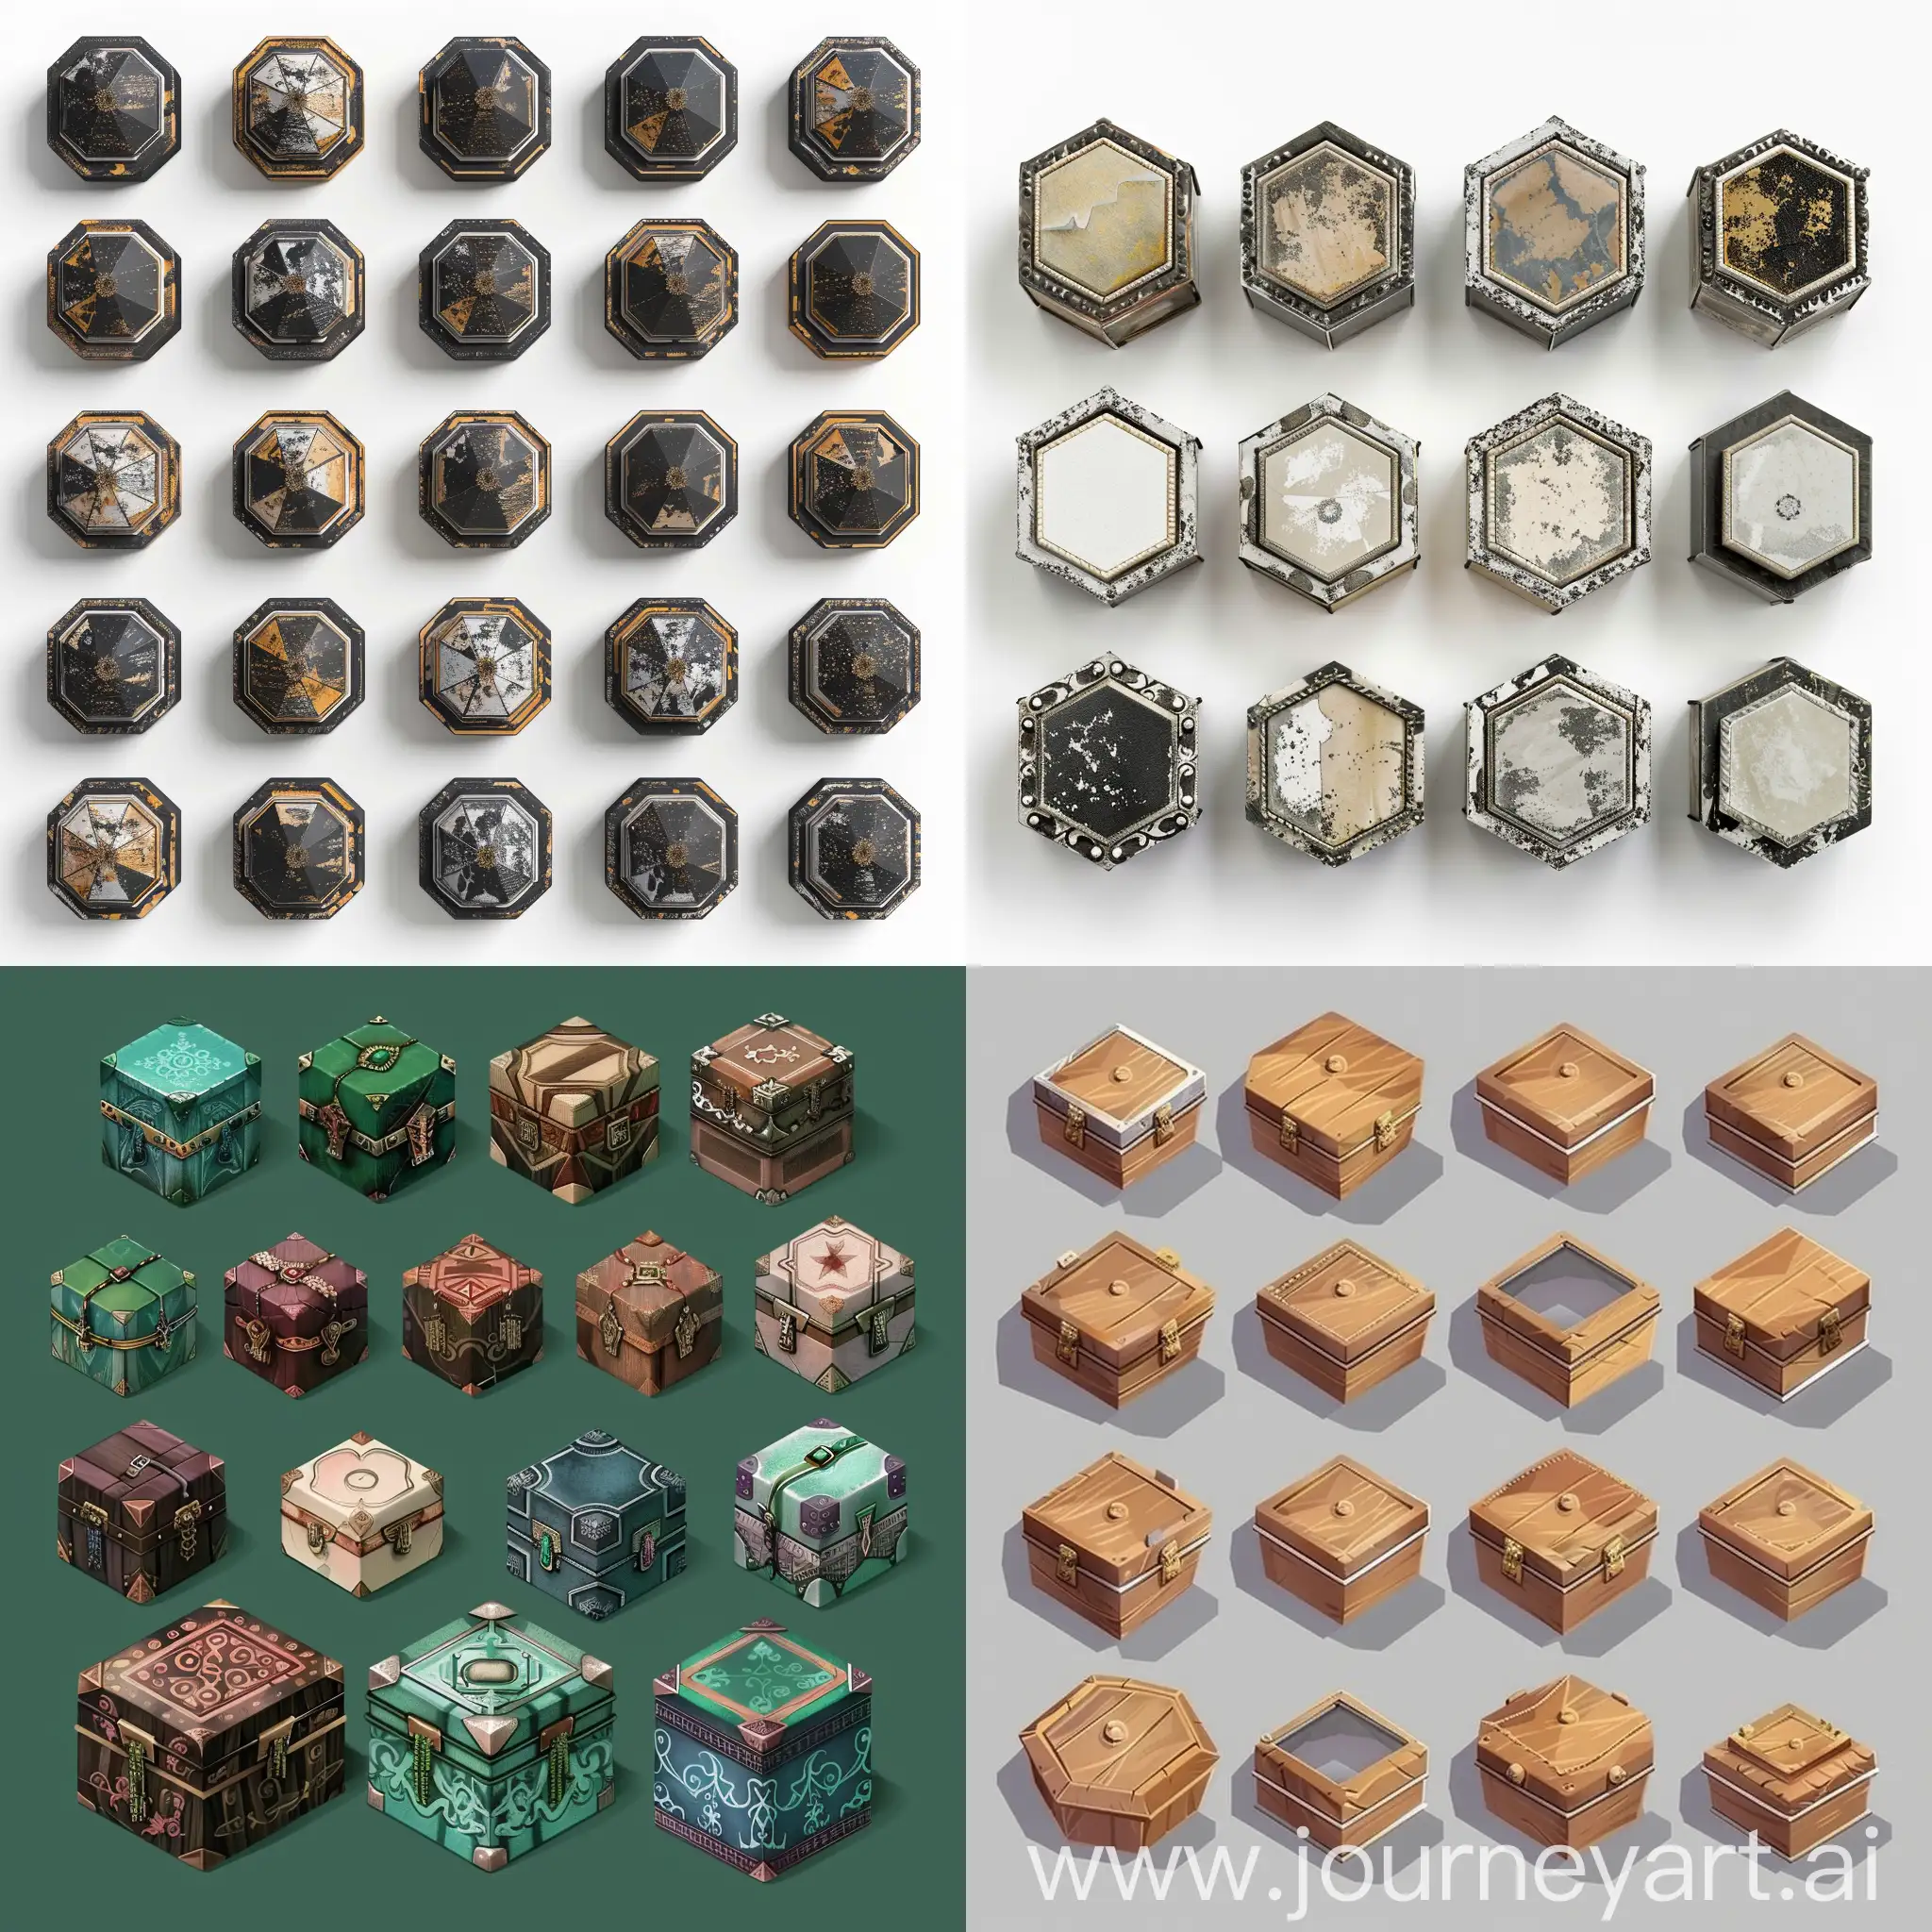 Isometric-Set-of-Worn-Realistic-Pentagonal-Jewelry-Boxes